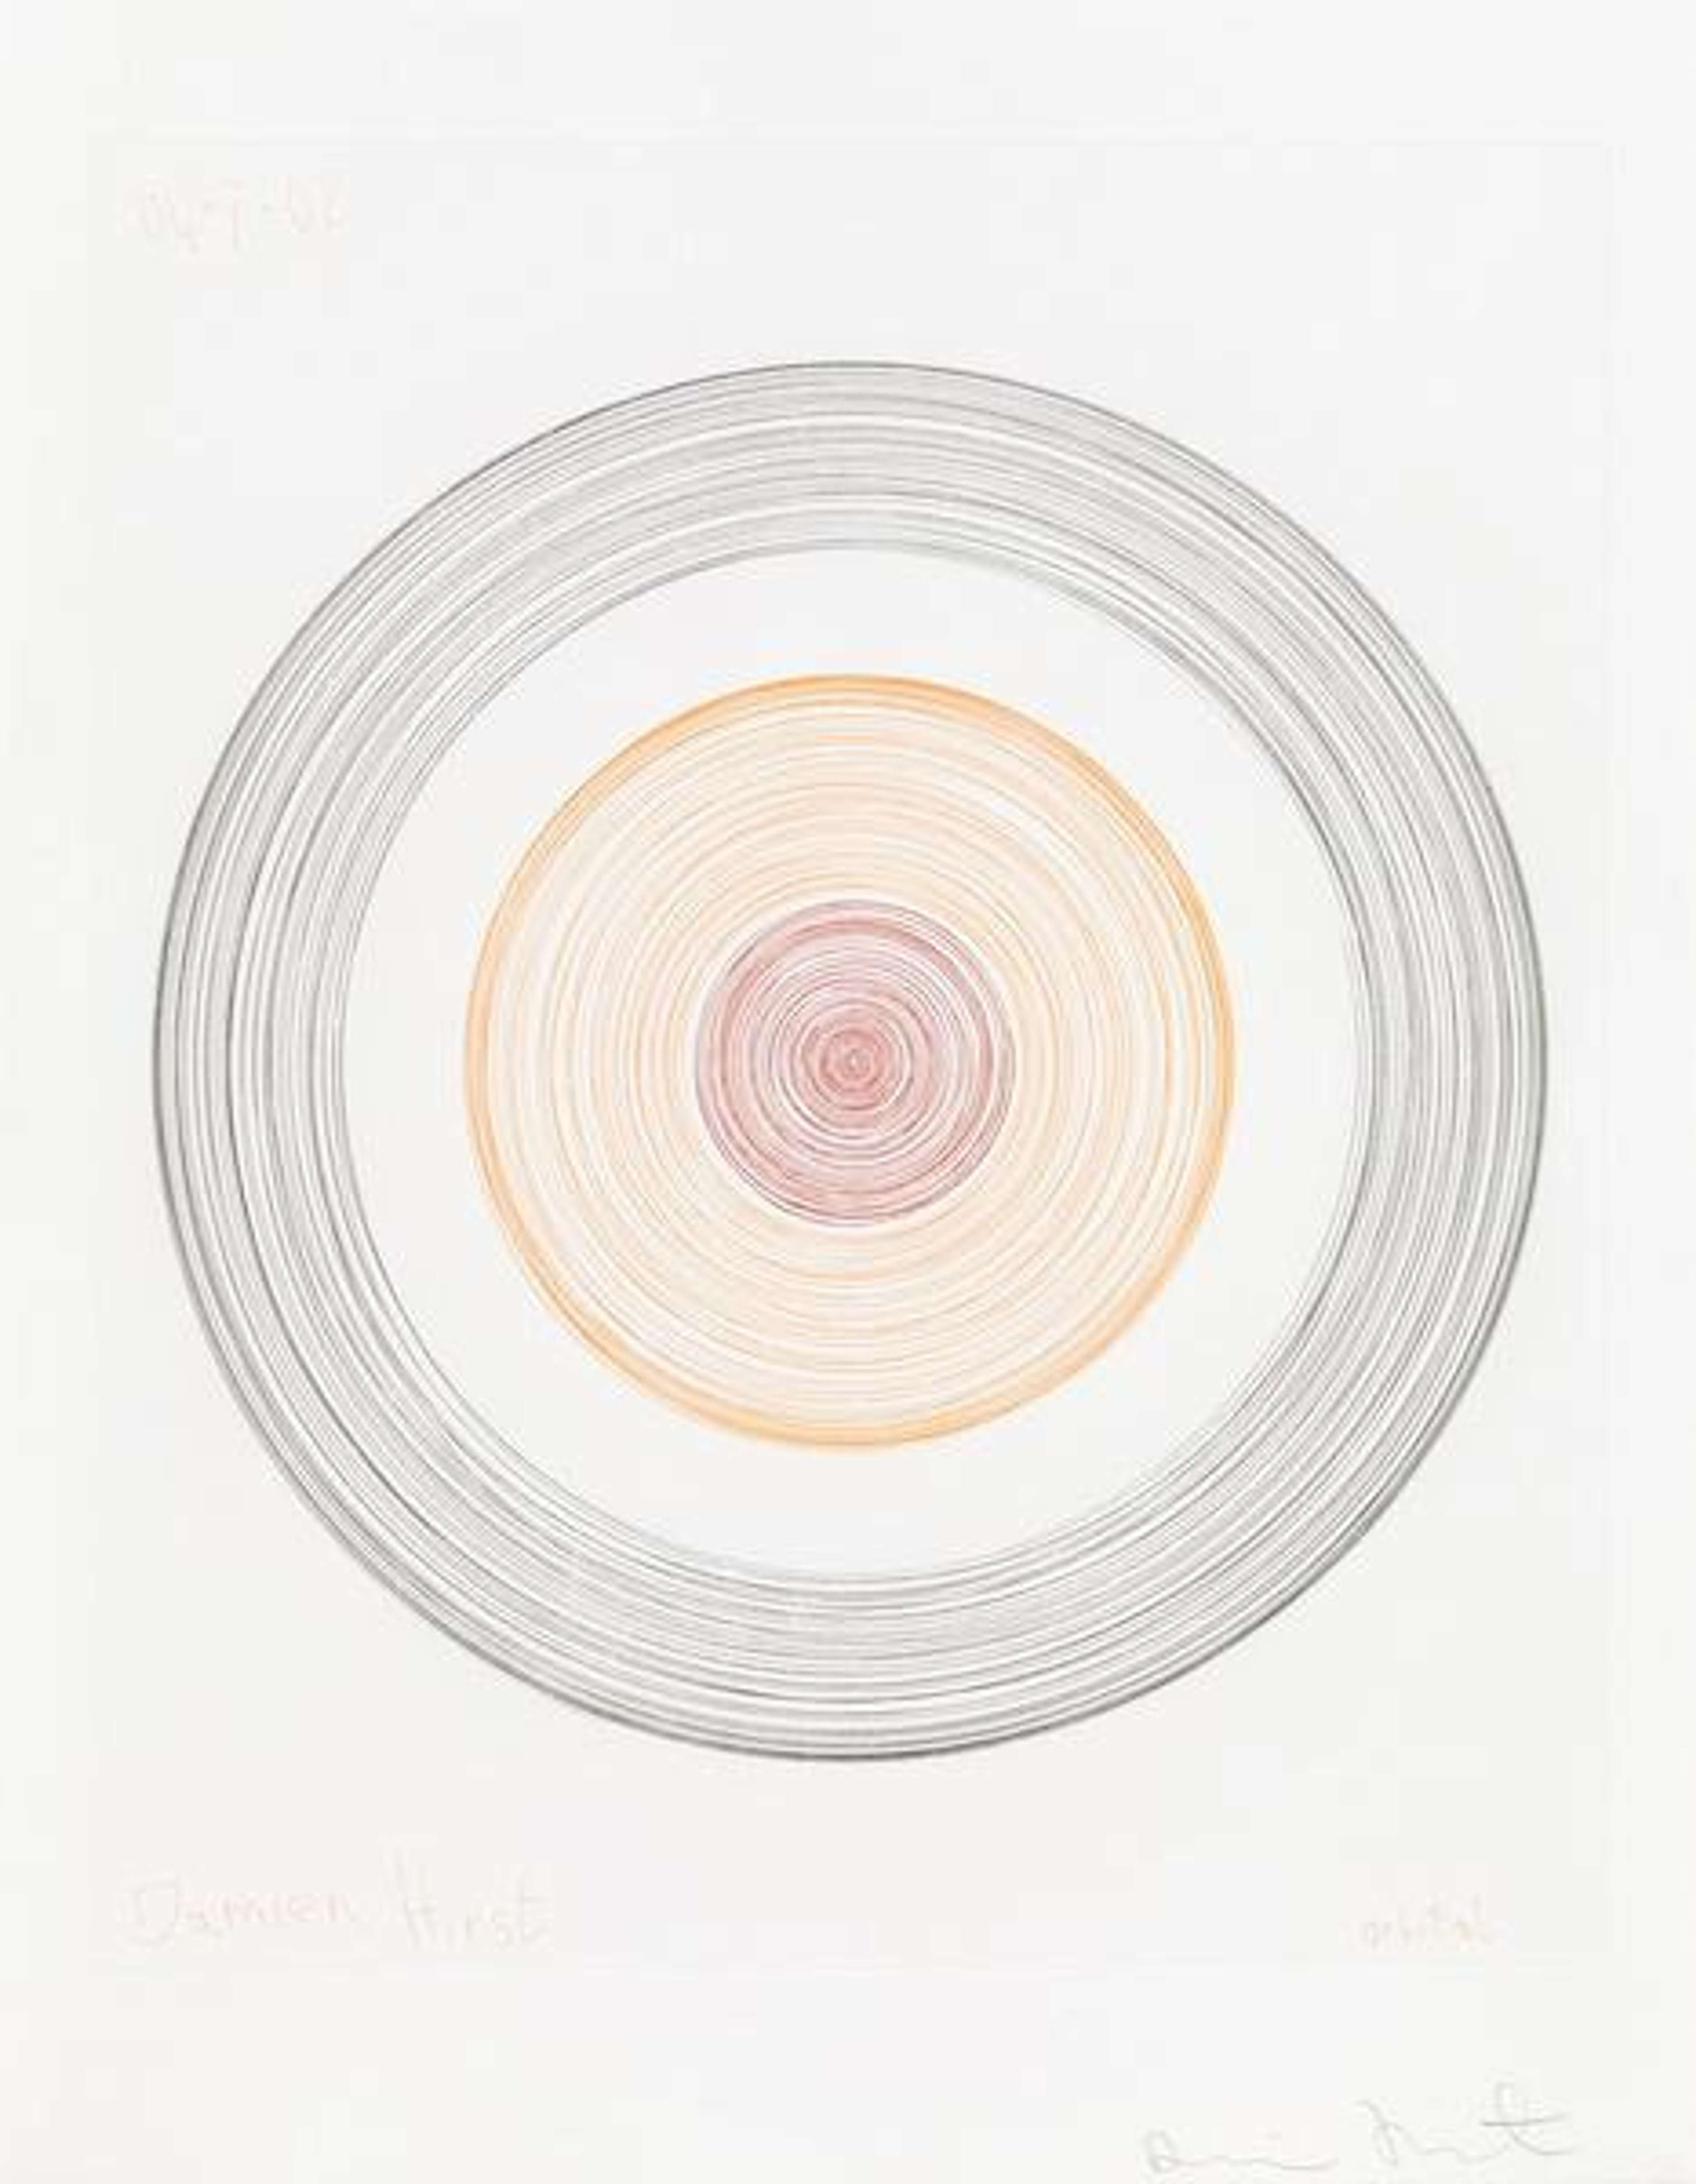 Orbital - Signed Print by Damien Hirst 2002 - MyArtBroker